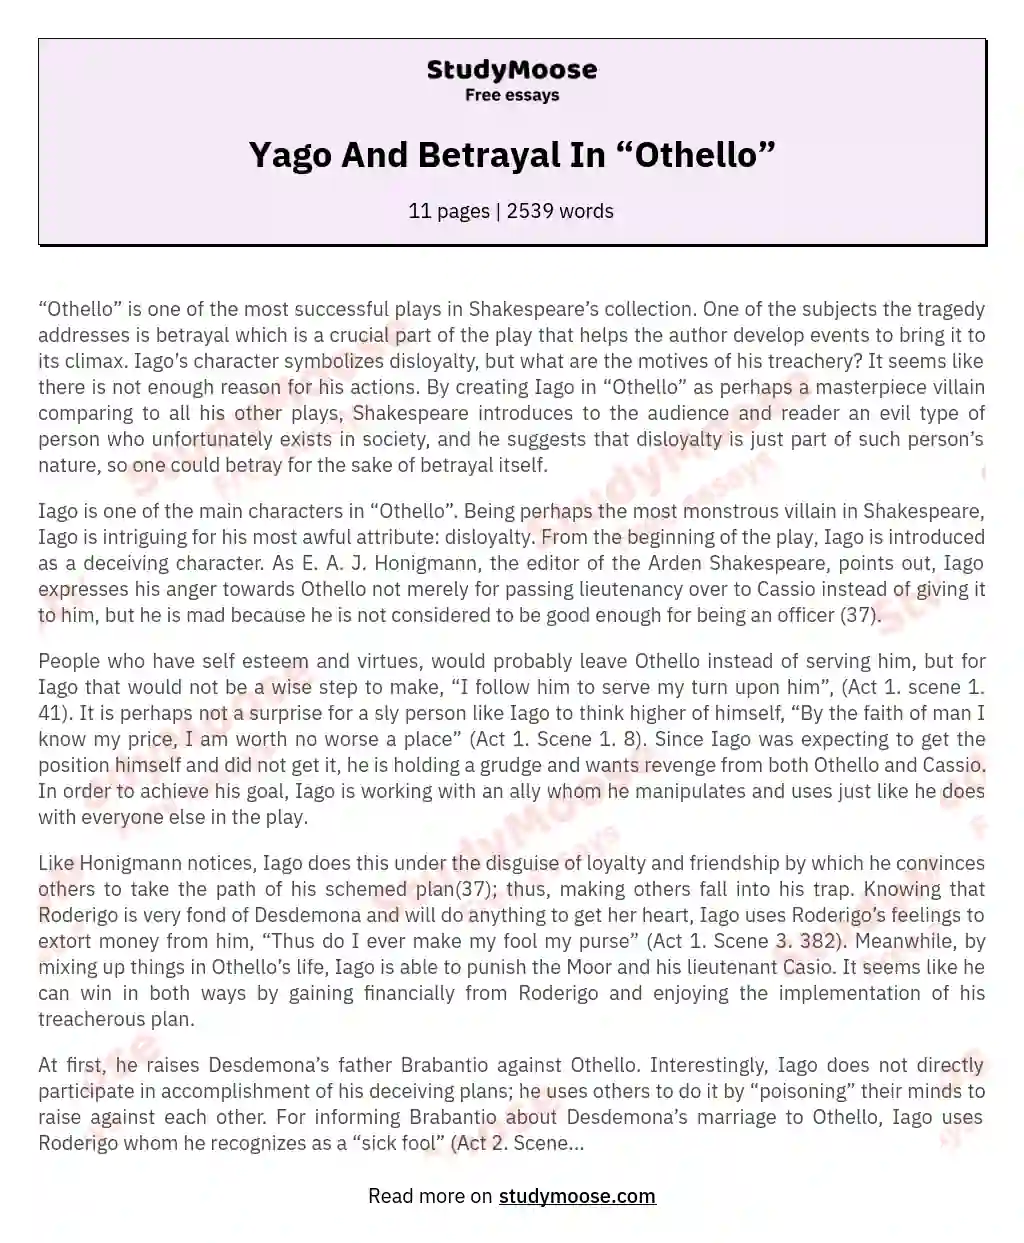 Yago And Betrayal In “Othello” essay